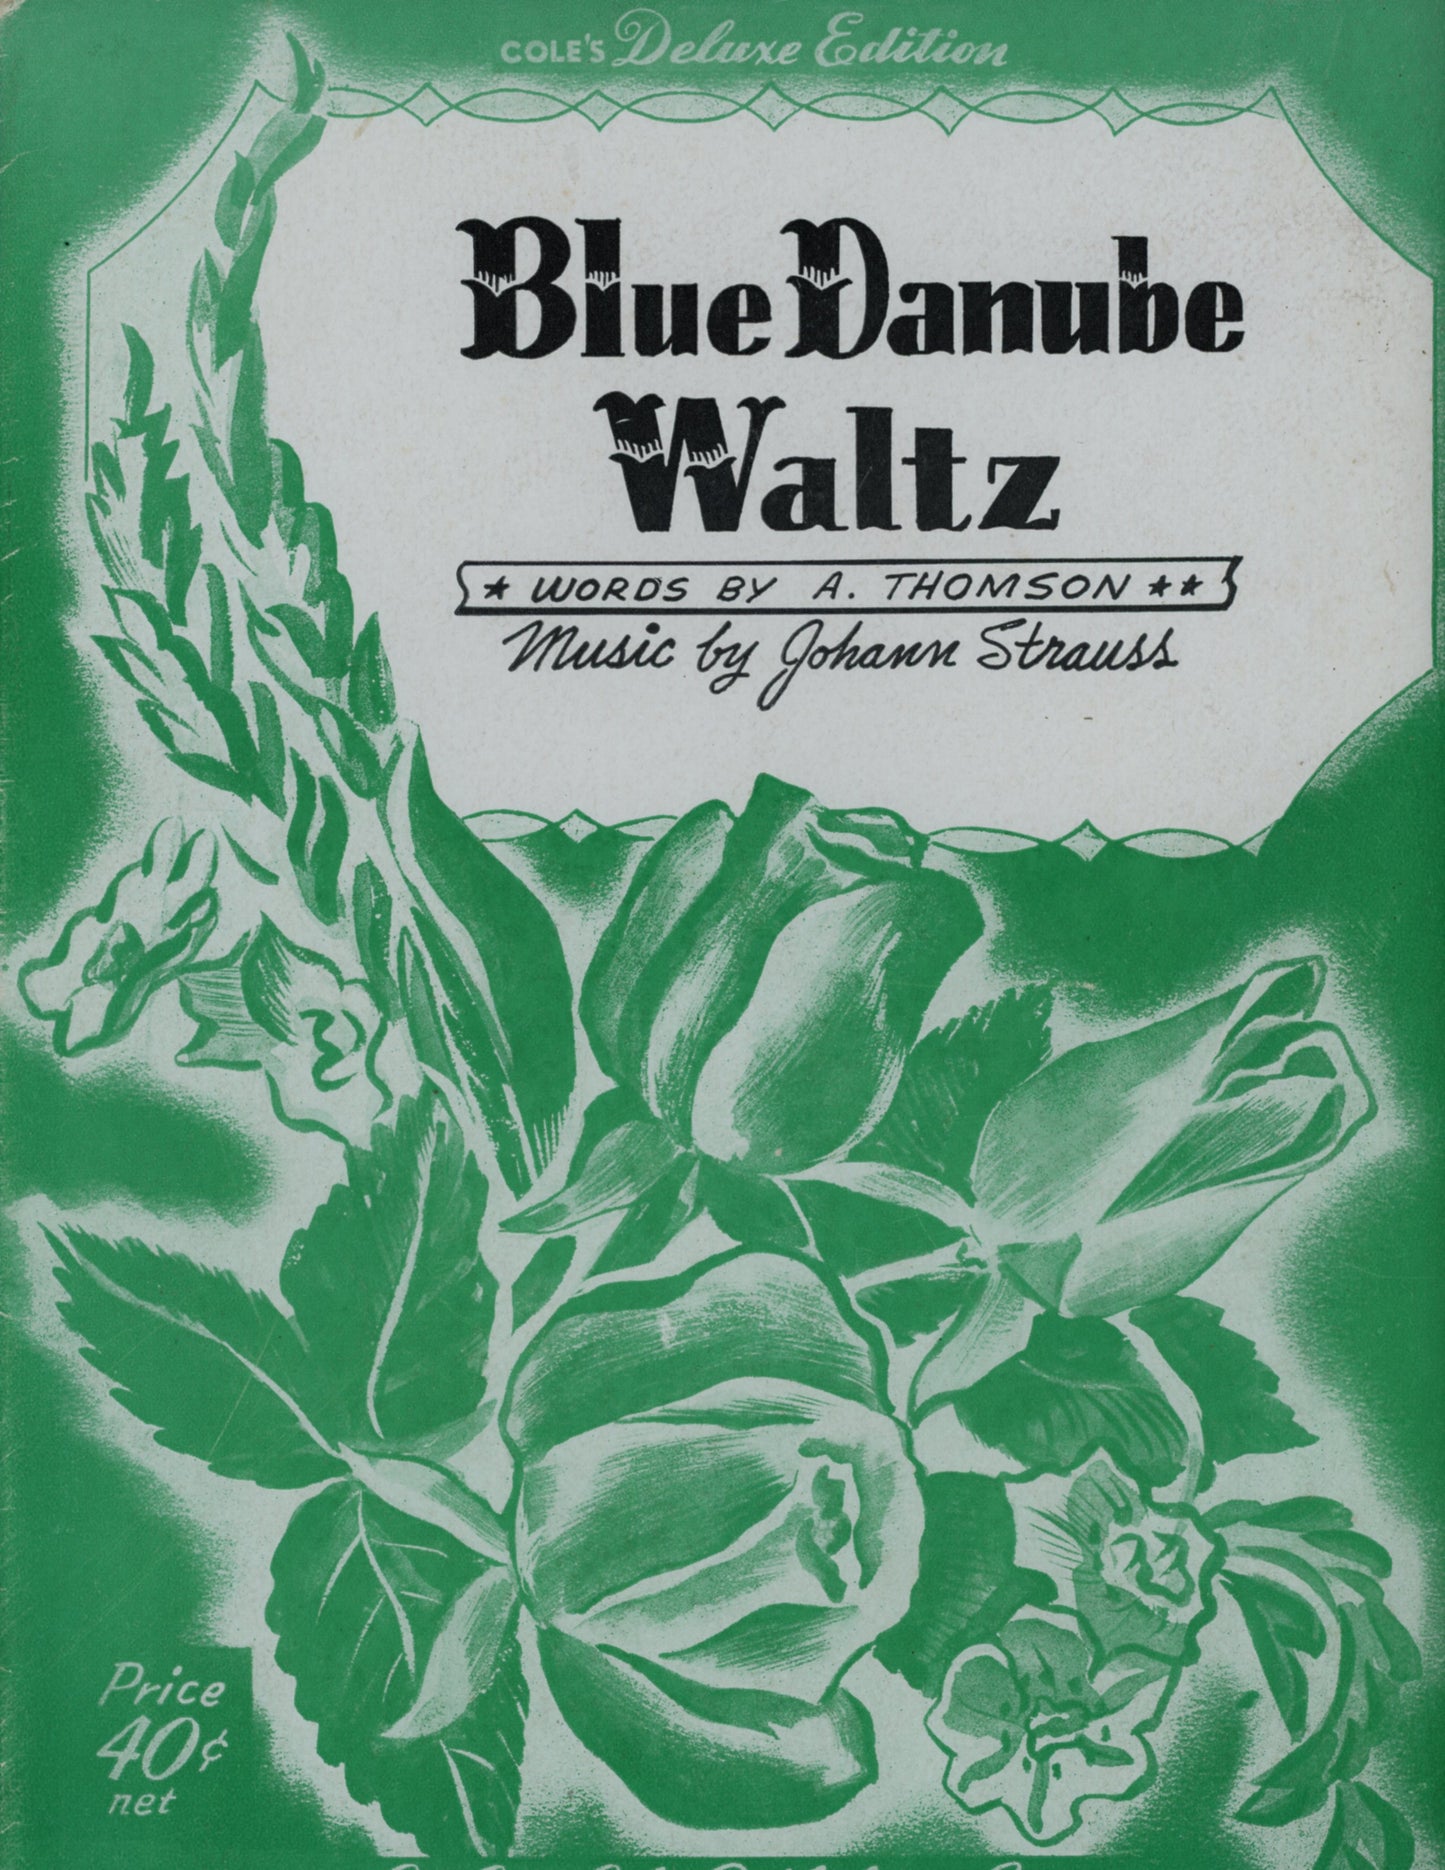 BLUE DANUBE WALTZ Music by Johann Straus Sheet Music ©1942